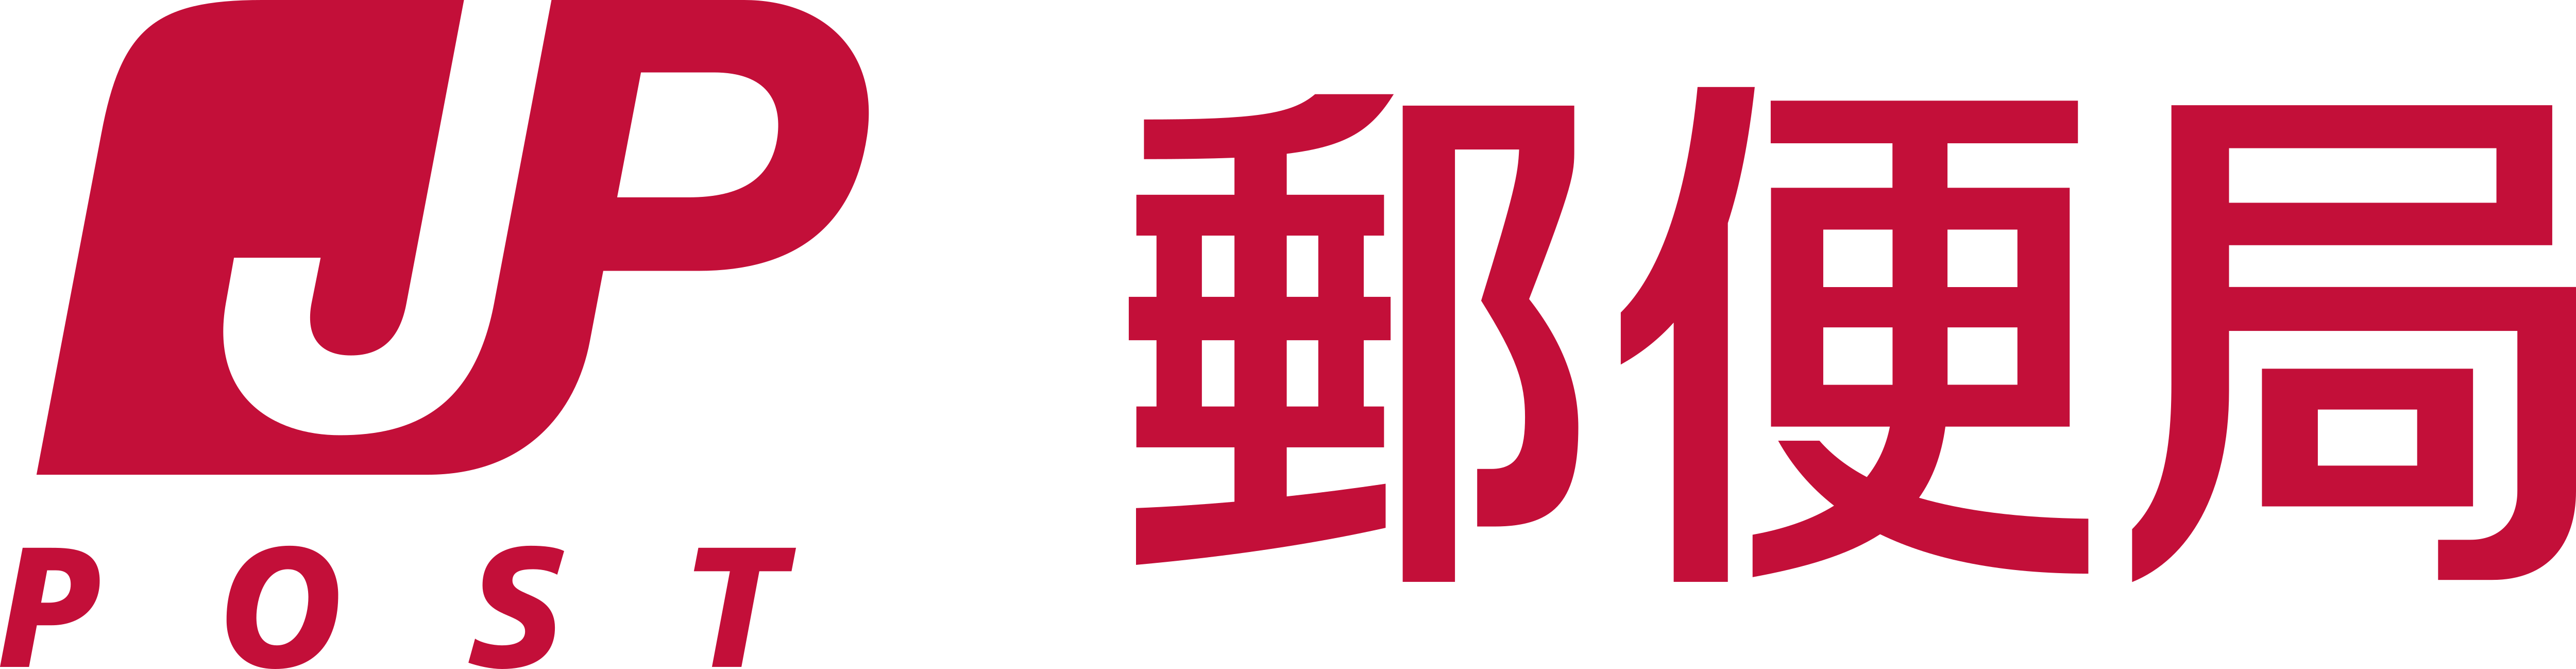 Japan Post Network – Logos Download